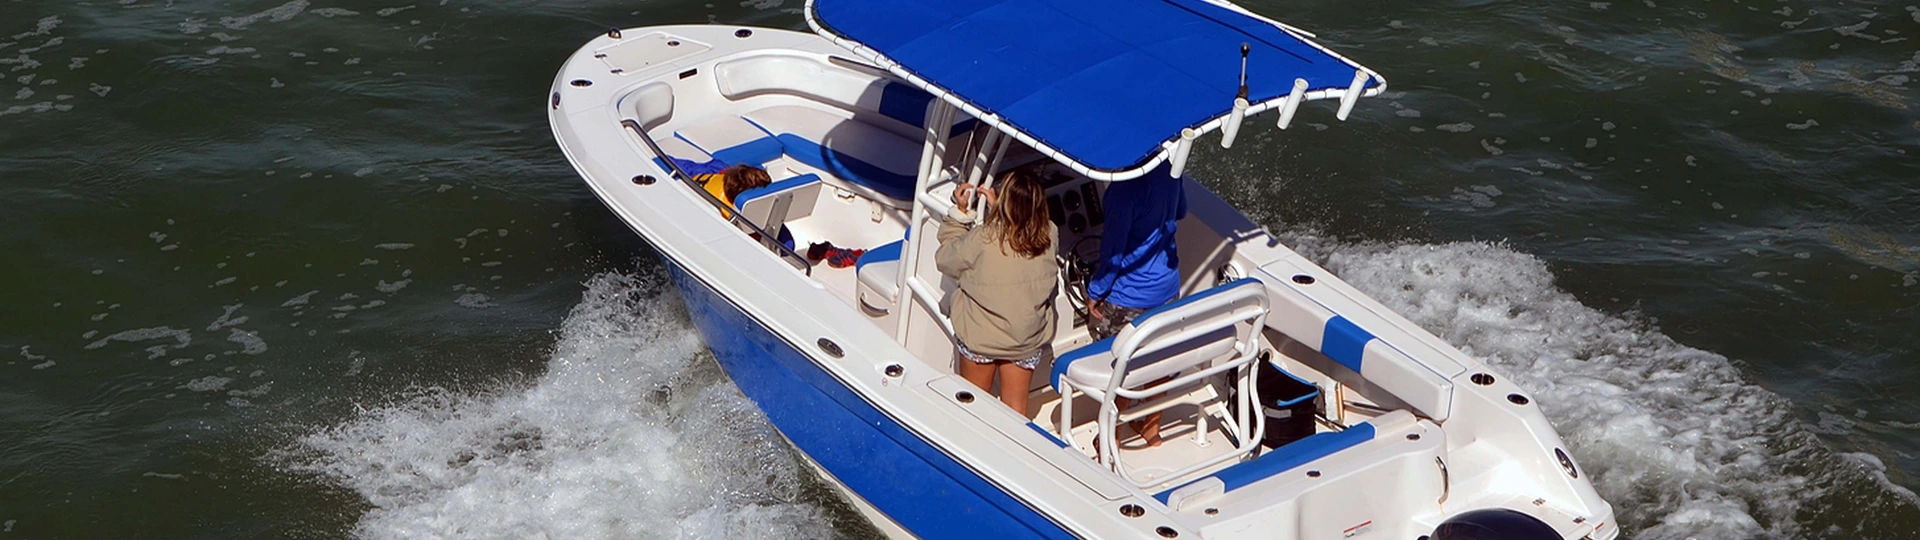 Florida Keys Boat Tour